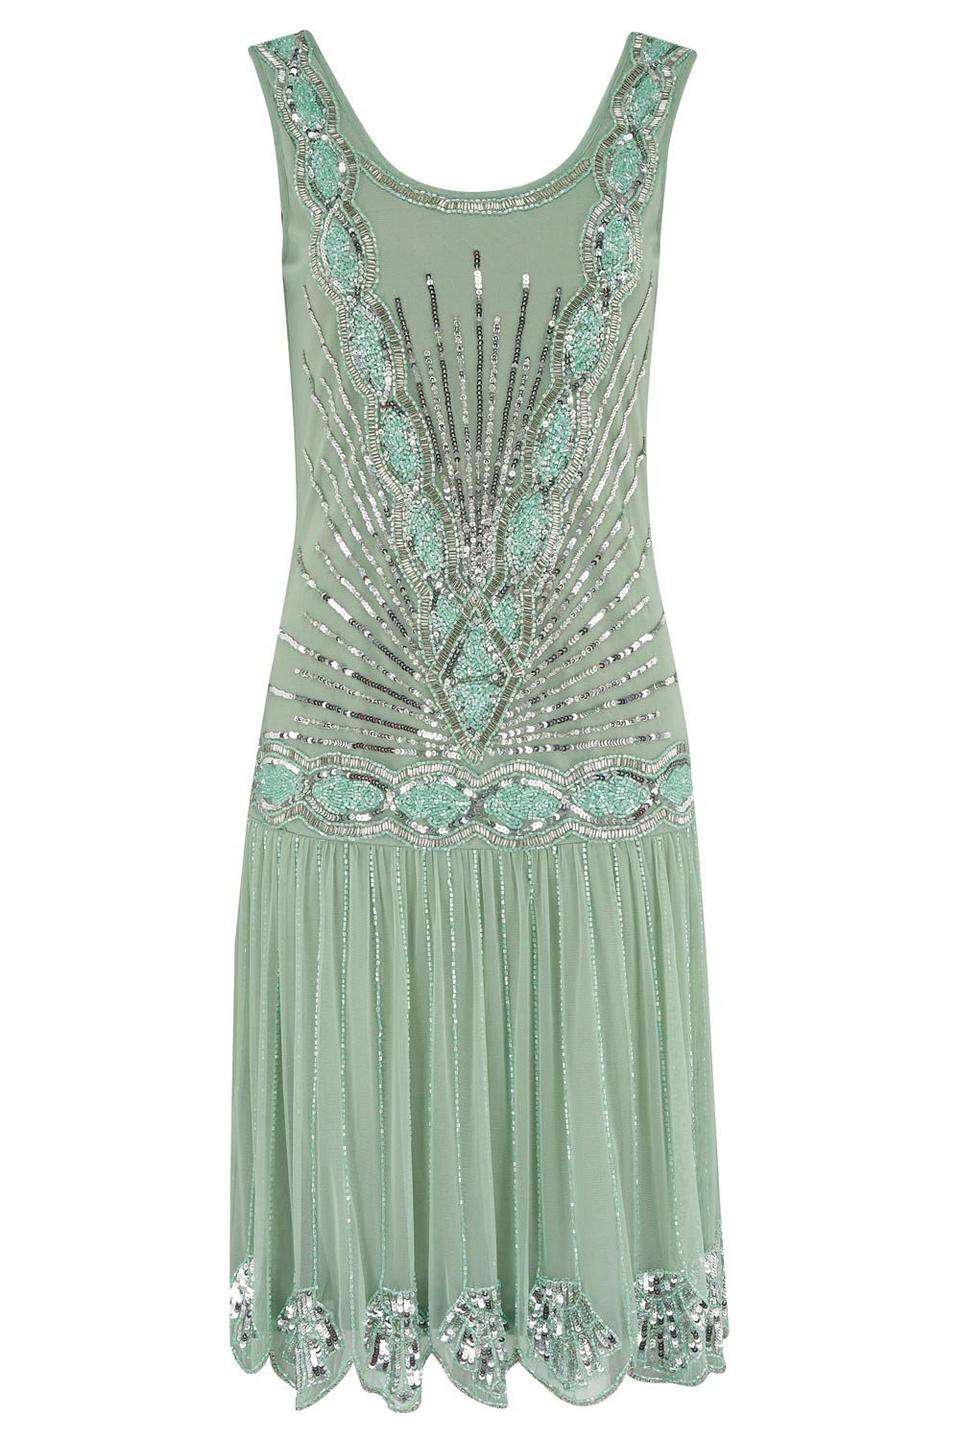 Vintage Bridesmaid Dresses - hitched.co.uk - hitched.co.uk